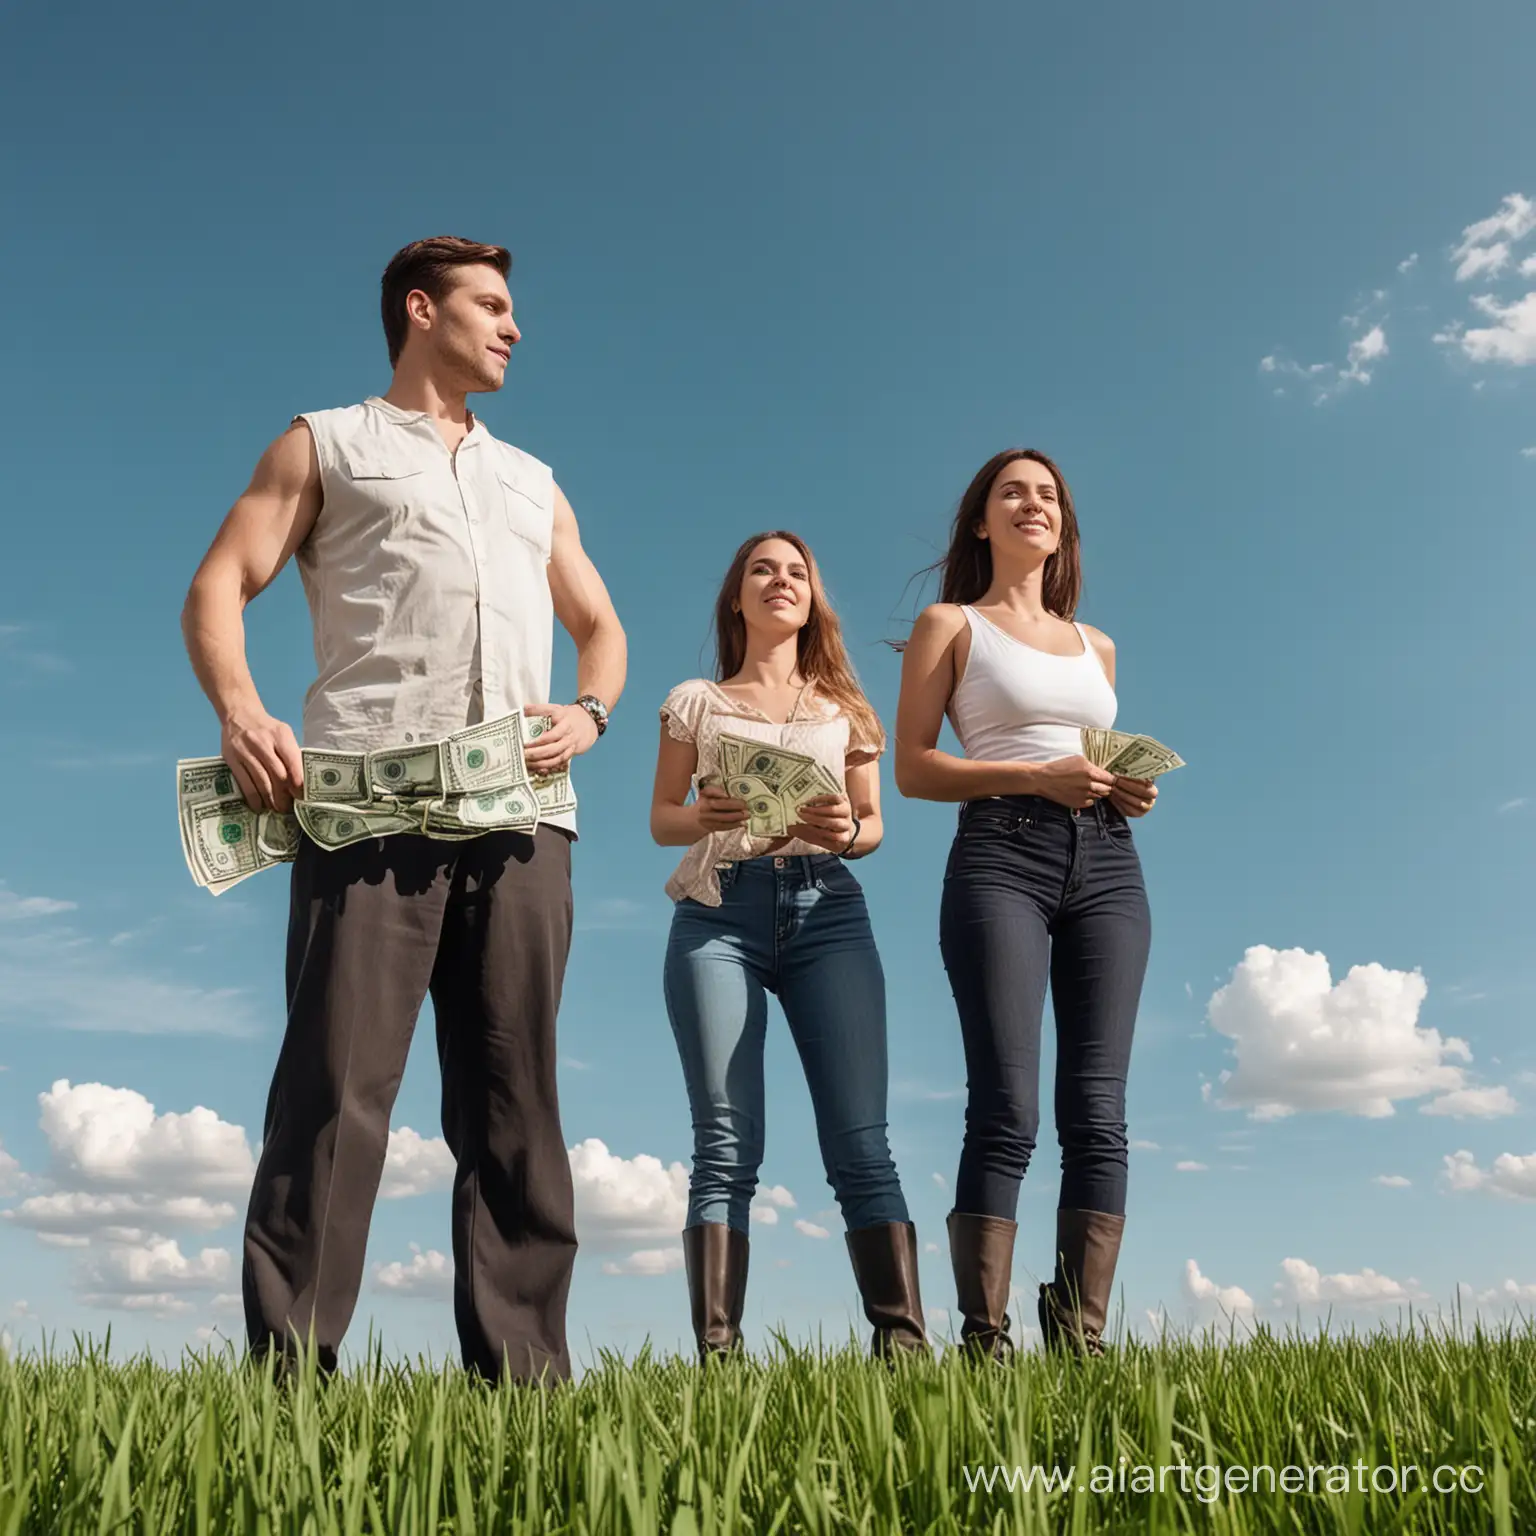 Мужчина и женщина с деньгами, на фоне голубого неба, стоят на зеленой траве